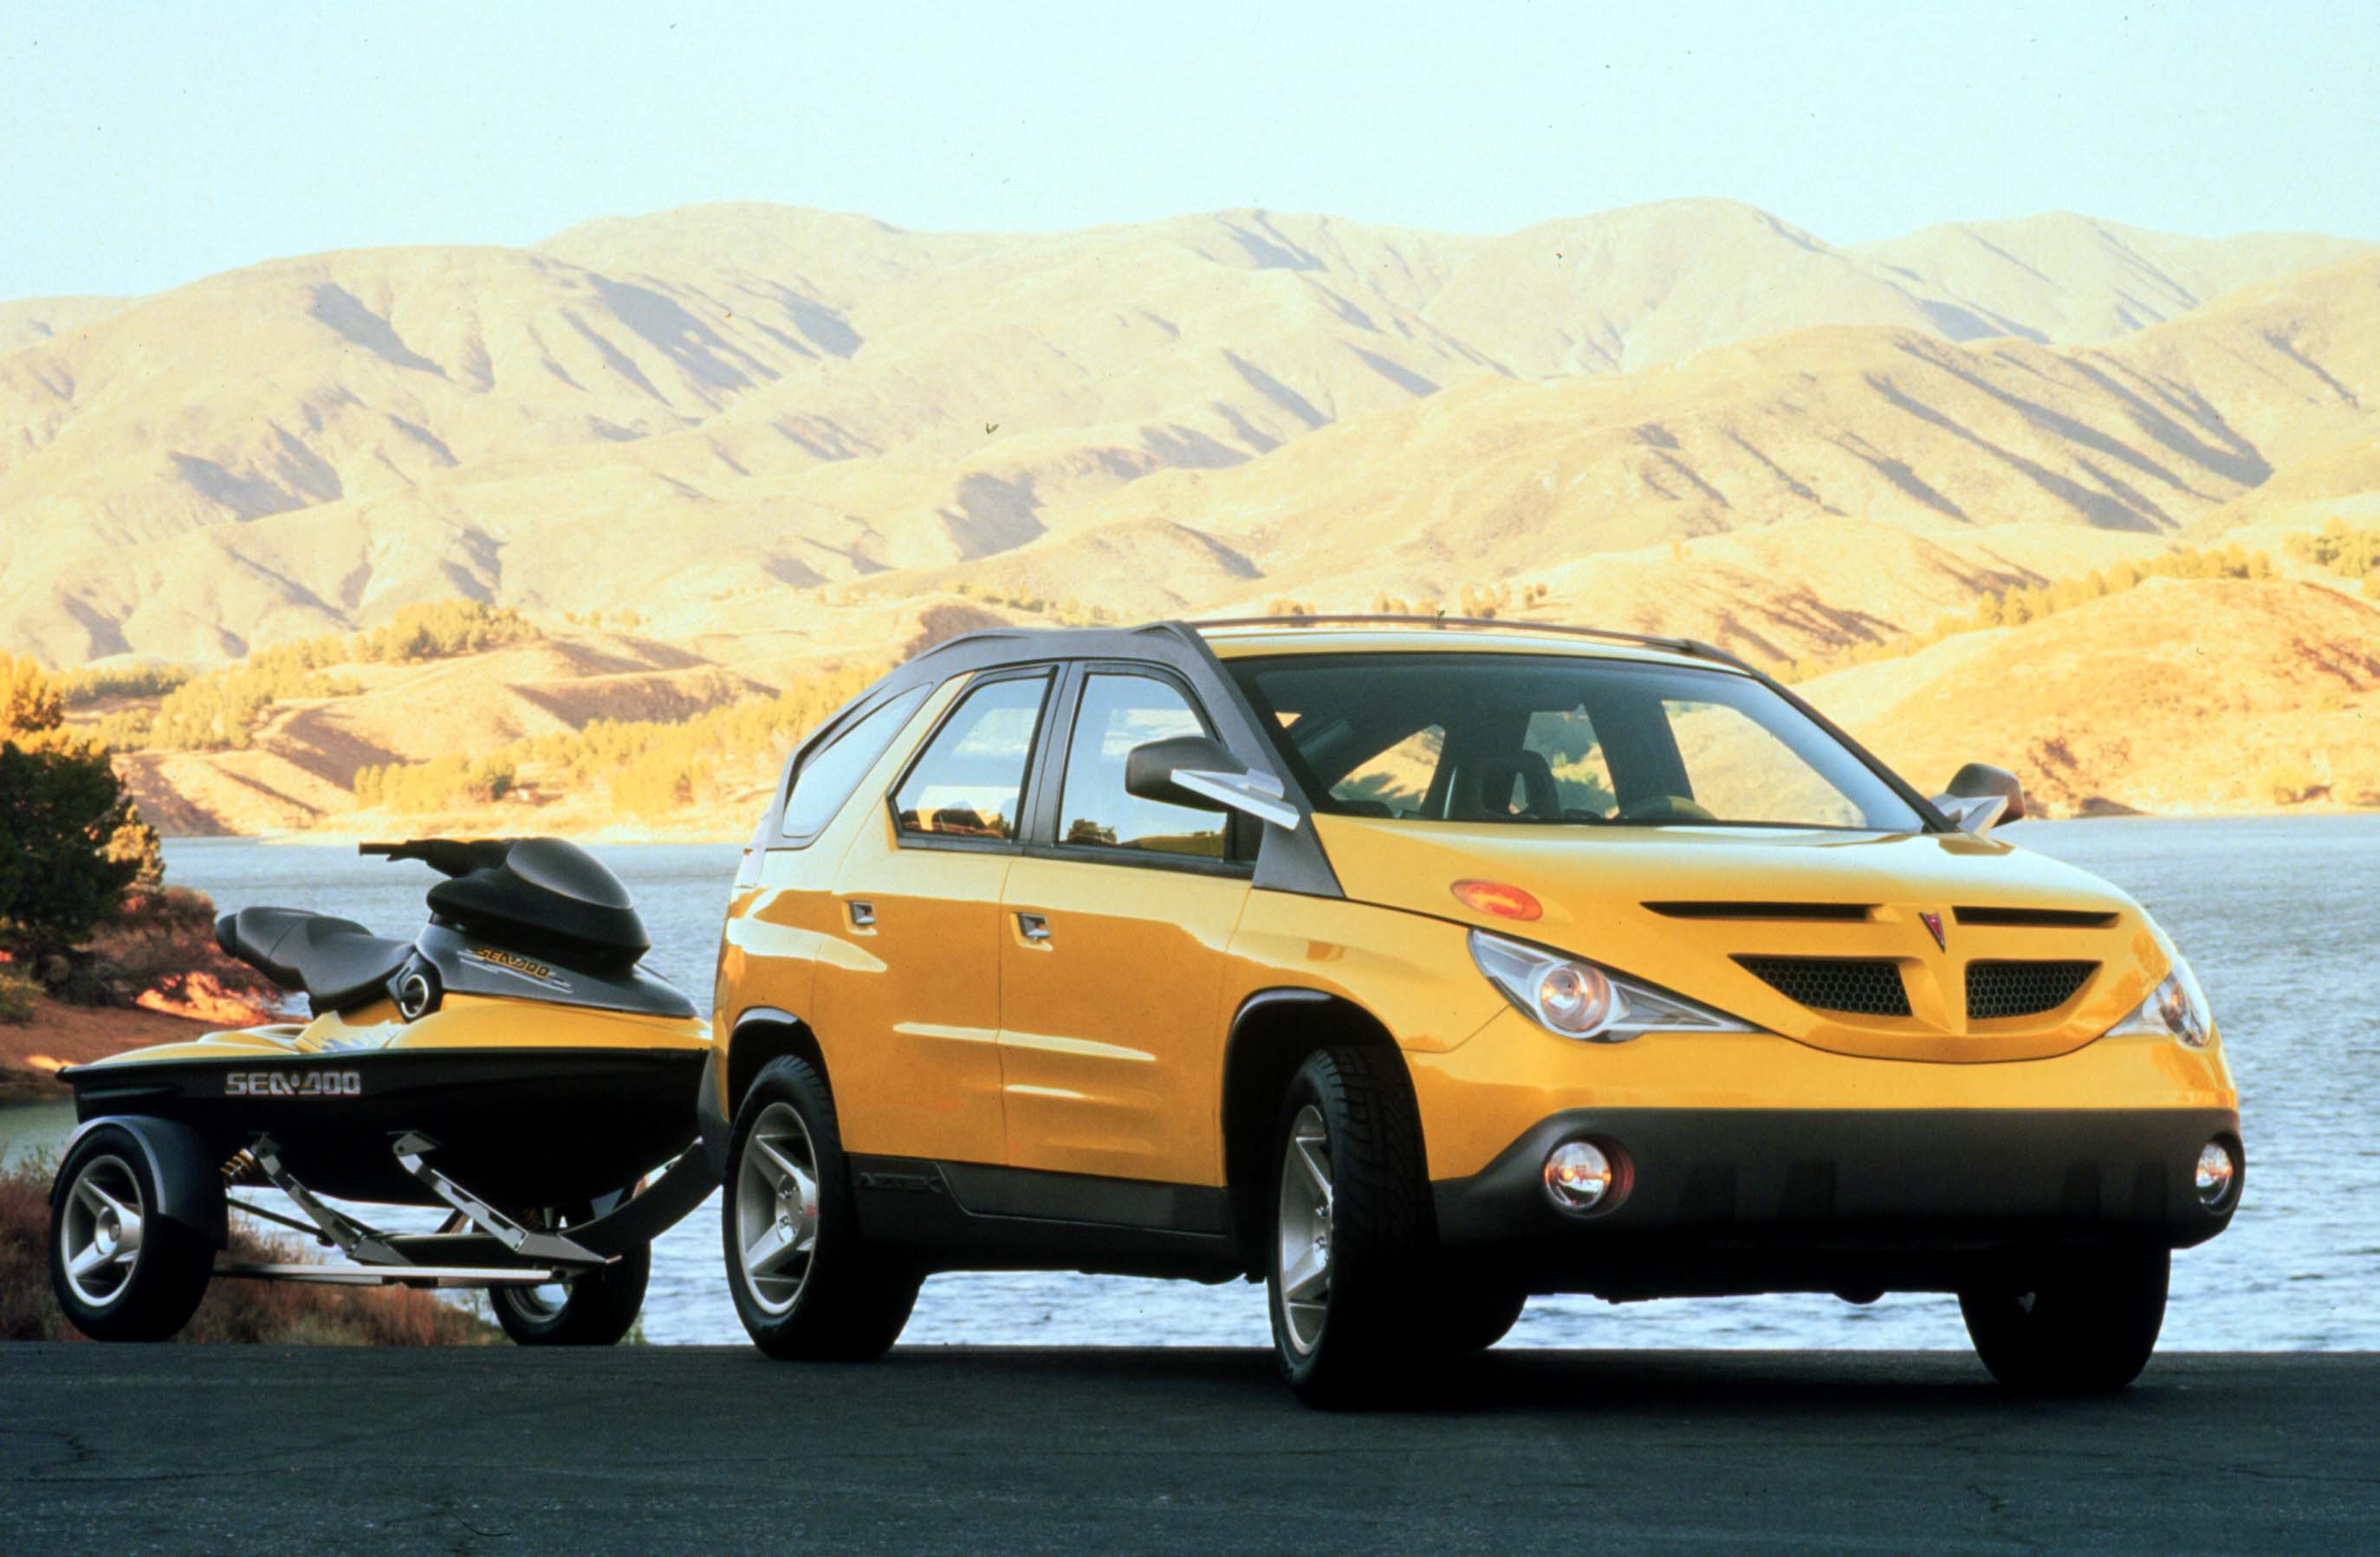 Pontiac Aztec Concept Vehicle, 1999